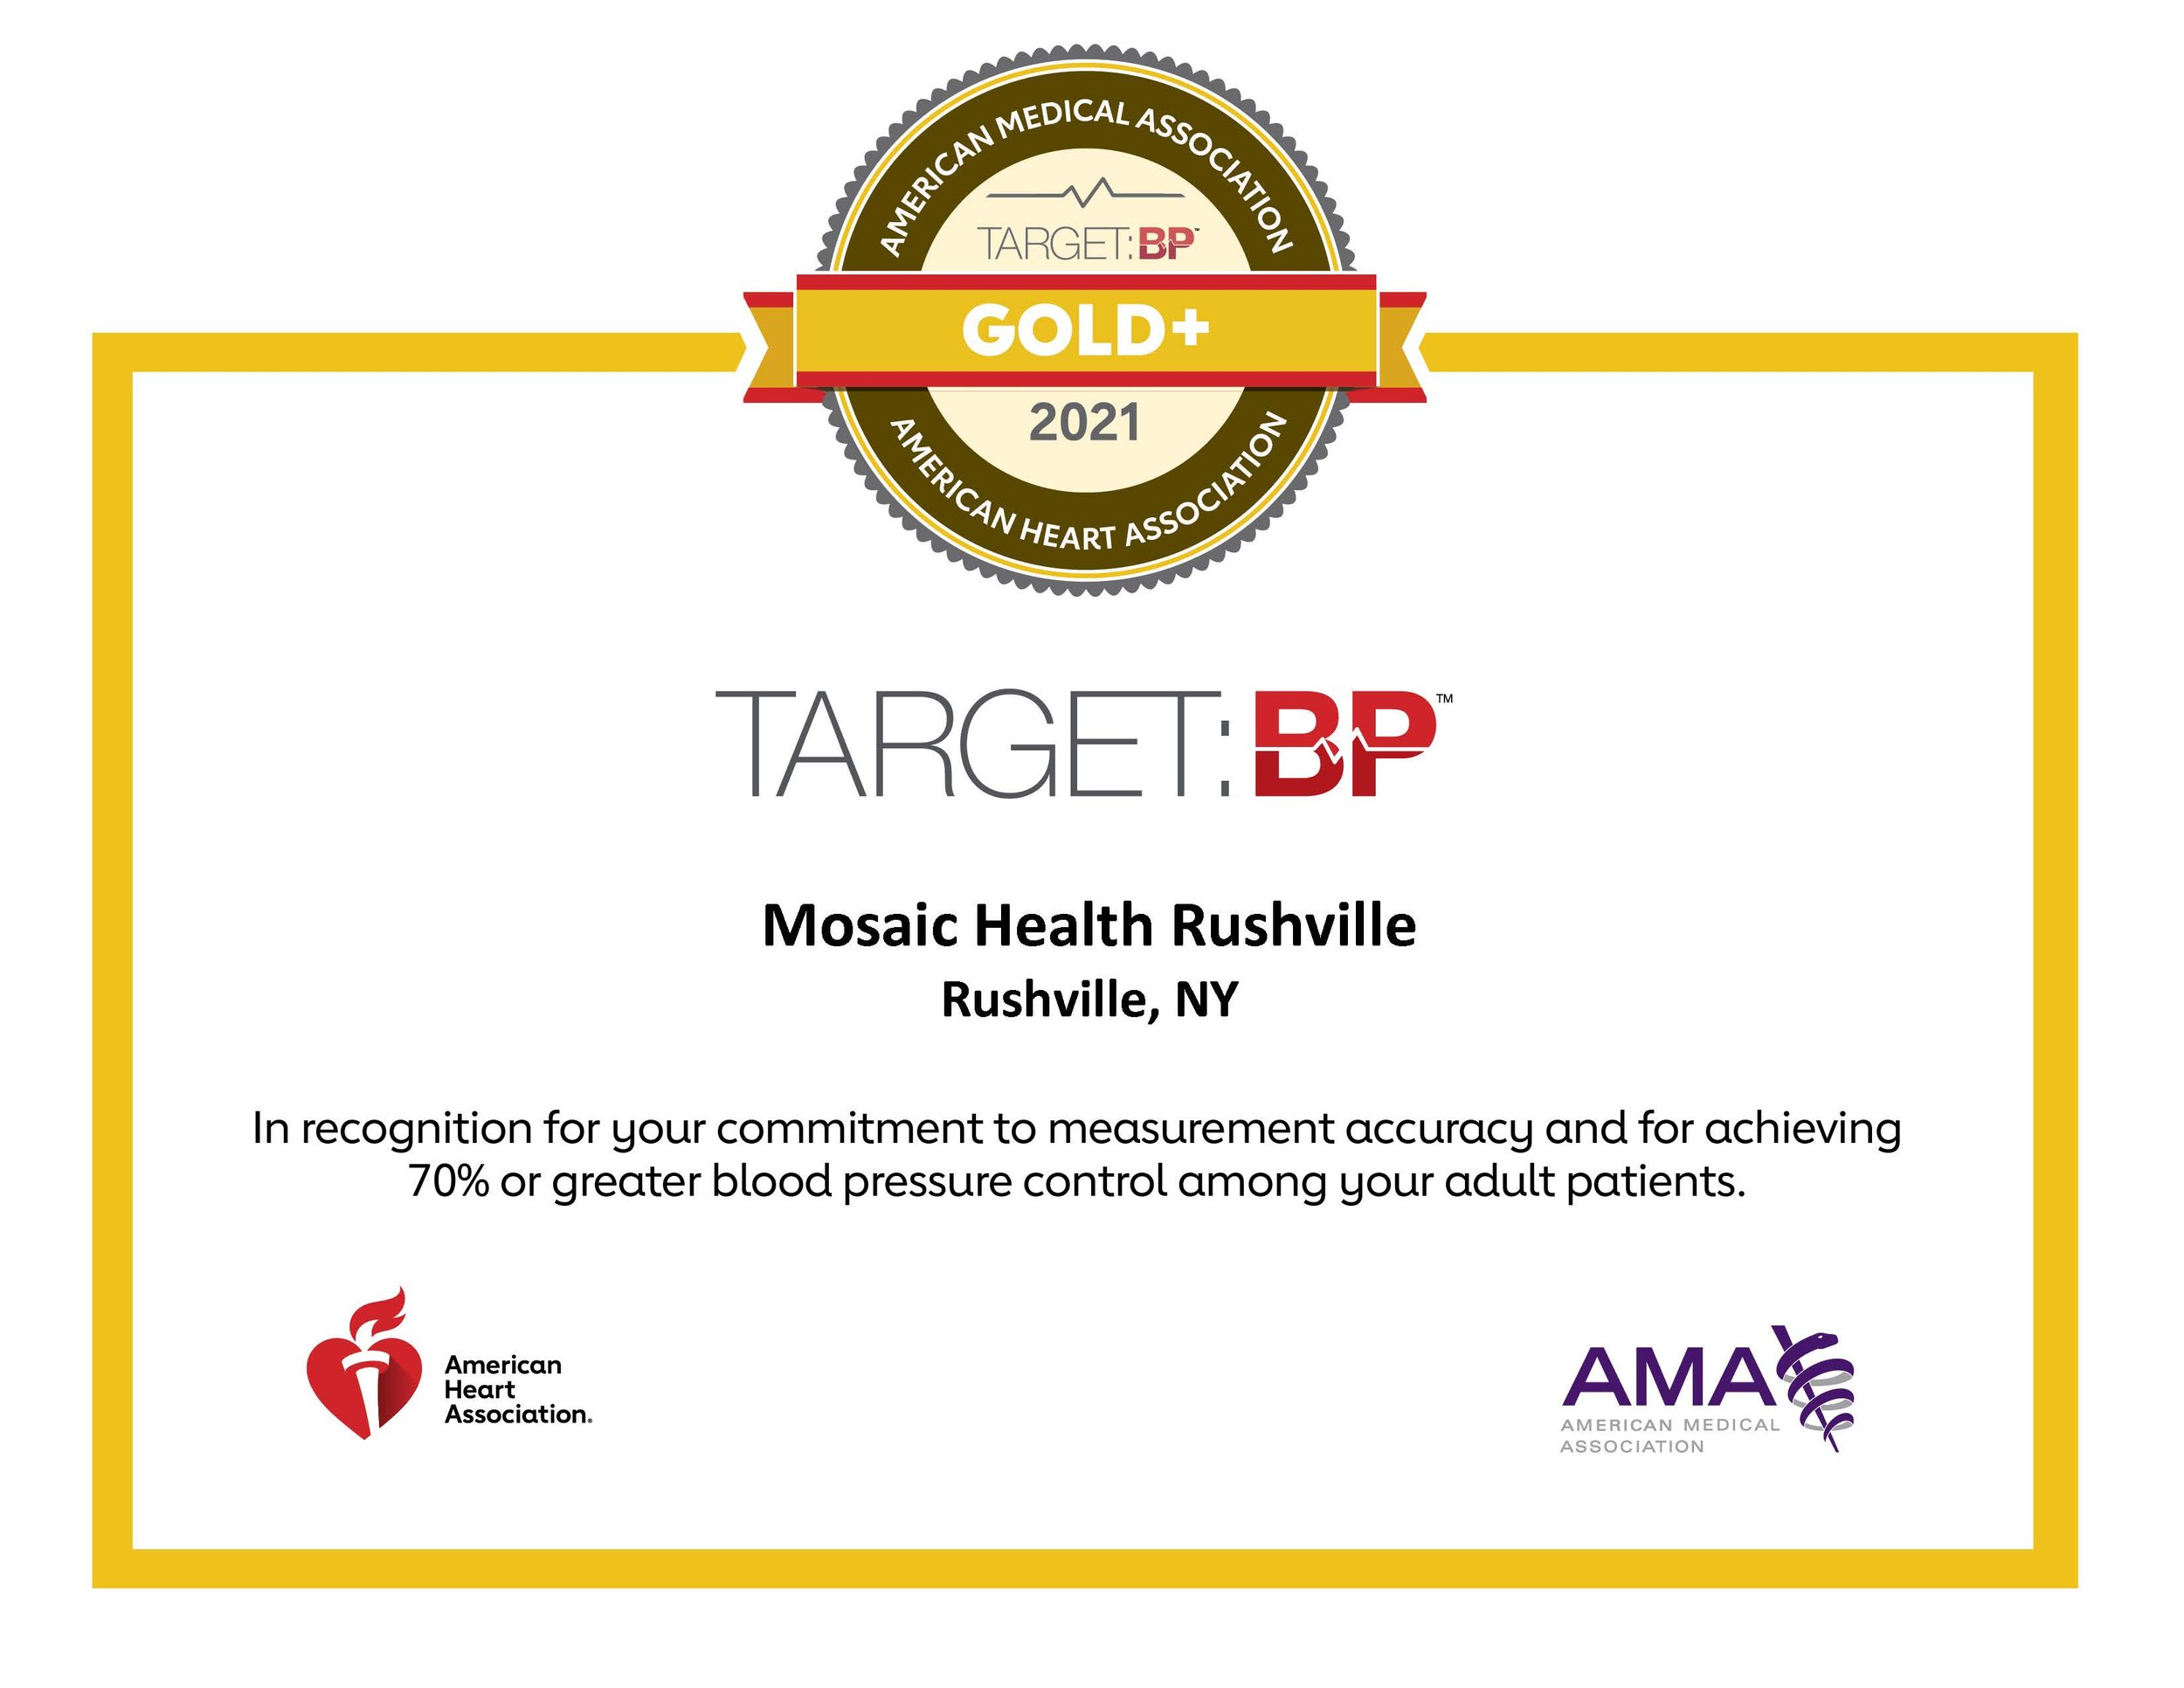 TBP_CERTIFICATE_GOLD+ 2021 - Mosaic Health Rushville - NY.jpg